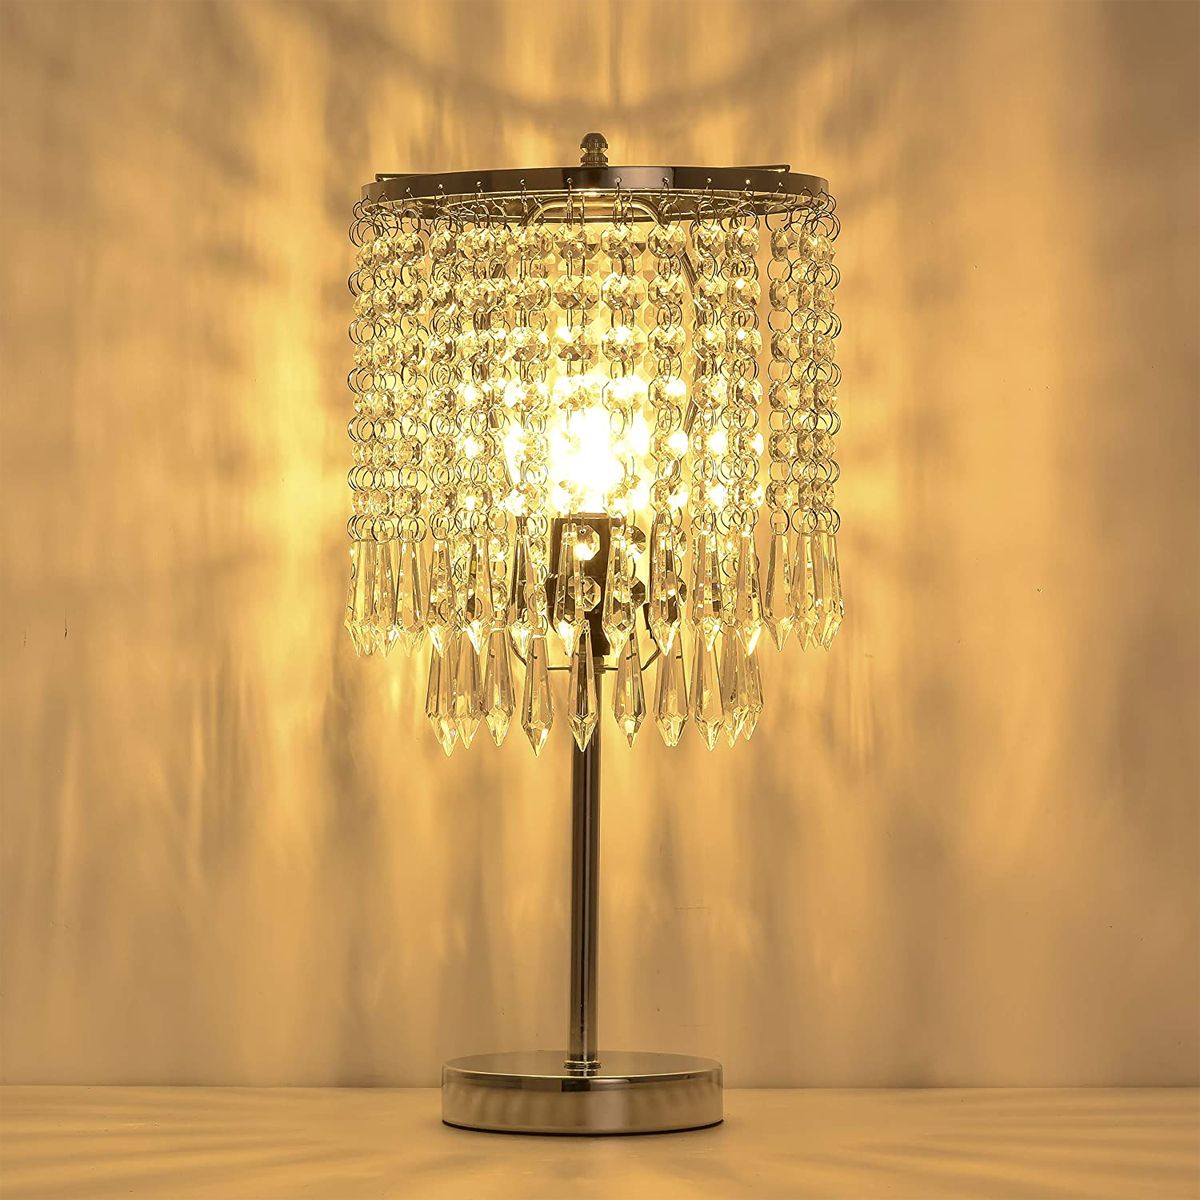 Crystal-Table-Pendant-Lamps-Bedroom-Modern-Wedding-Decoration-Dimmable-Desk-Lamp-for-Bedside-Living--1789821-8